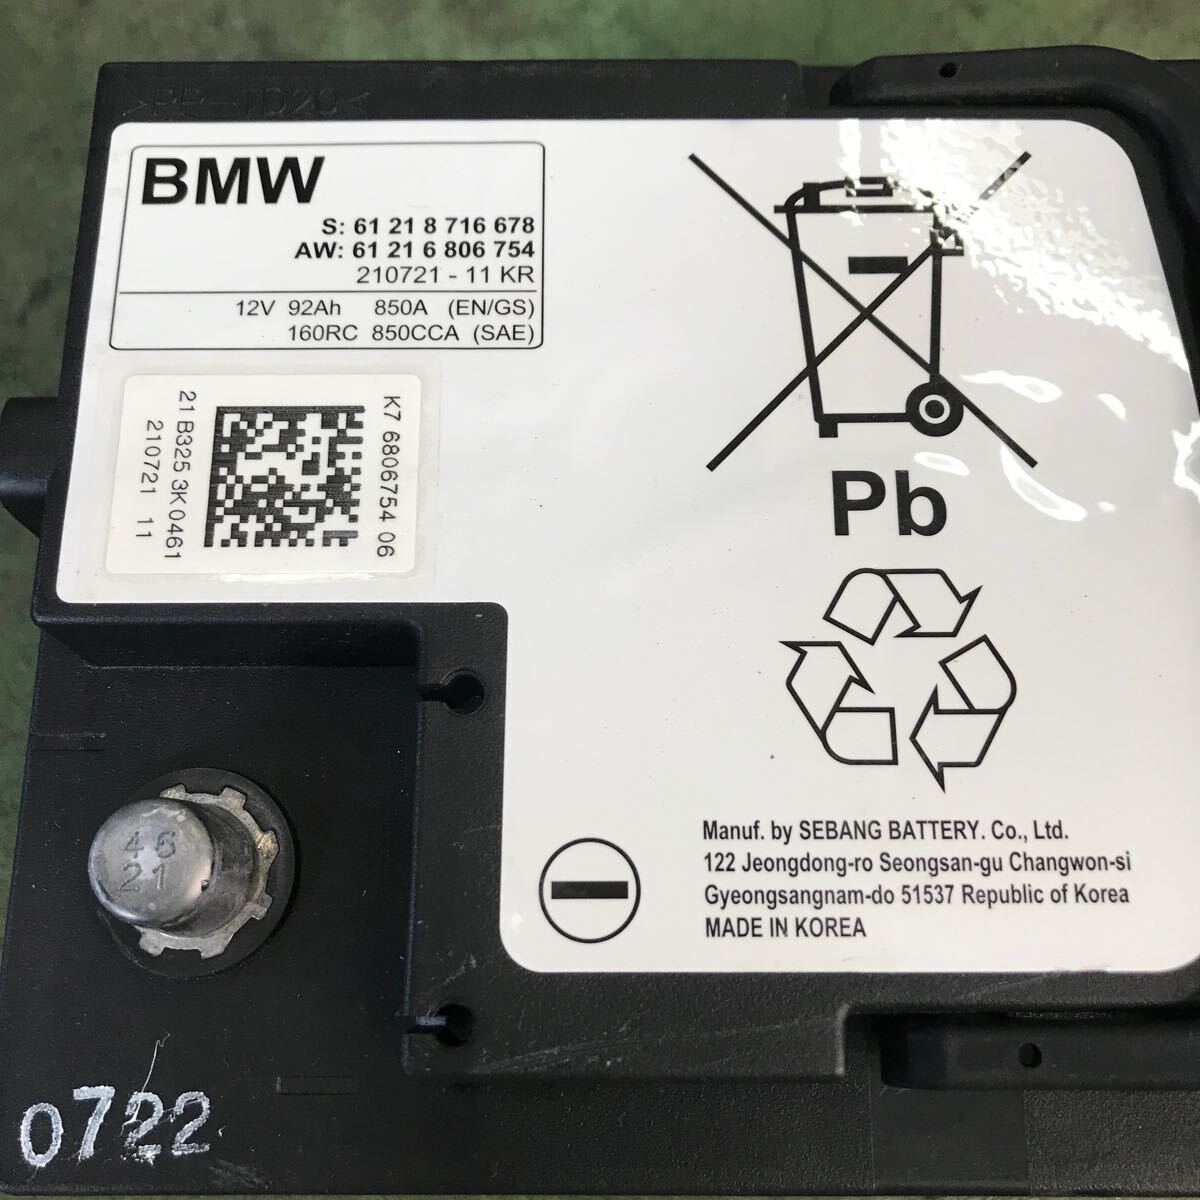 [G-43] BMW VRLA/AGM バッテリー 210721-11KR S: 61 21 8 716 678送料無料の画像2